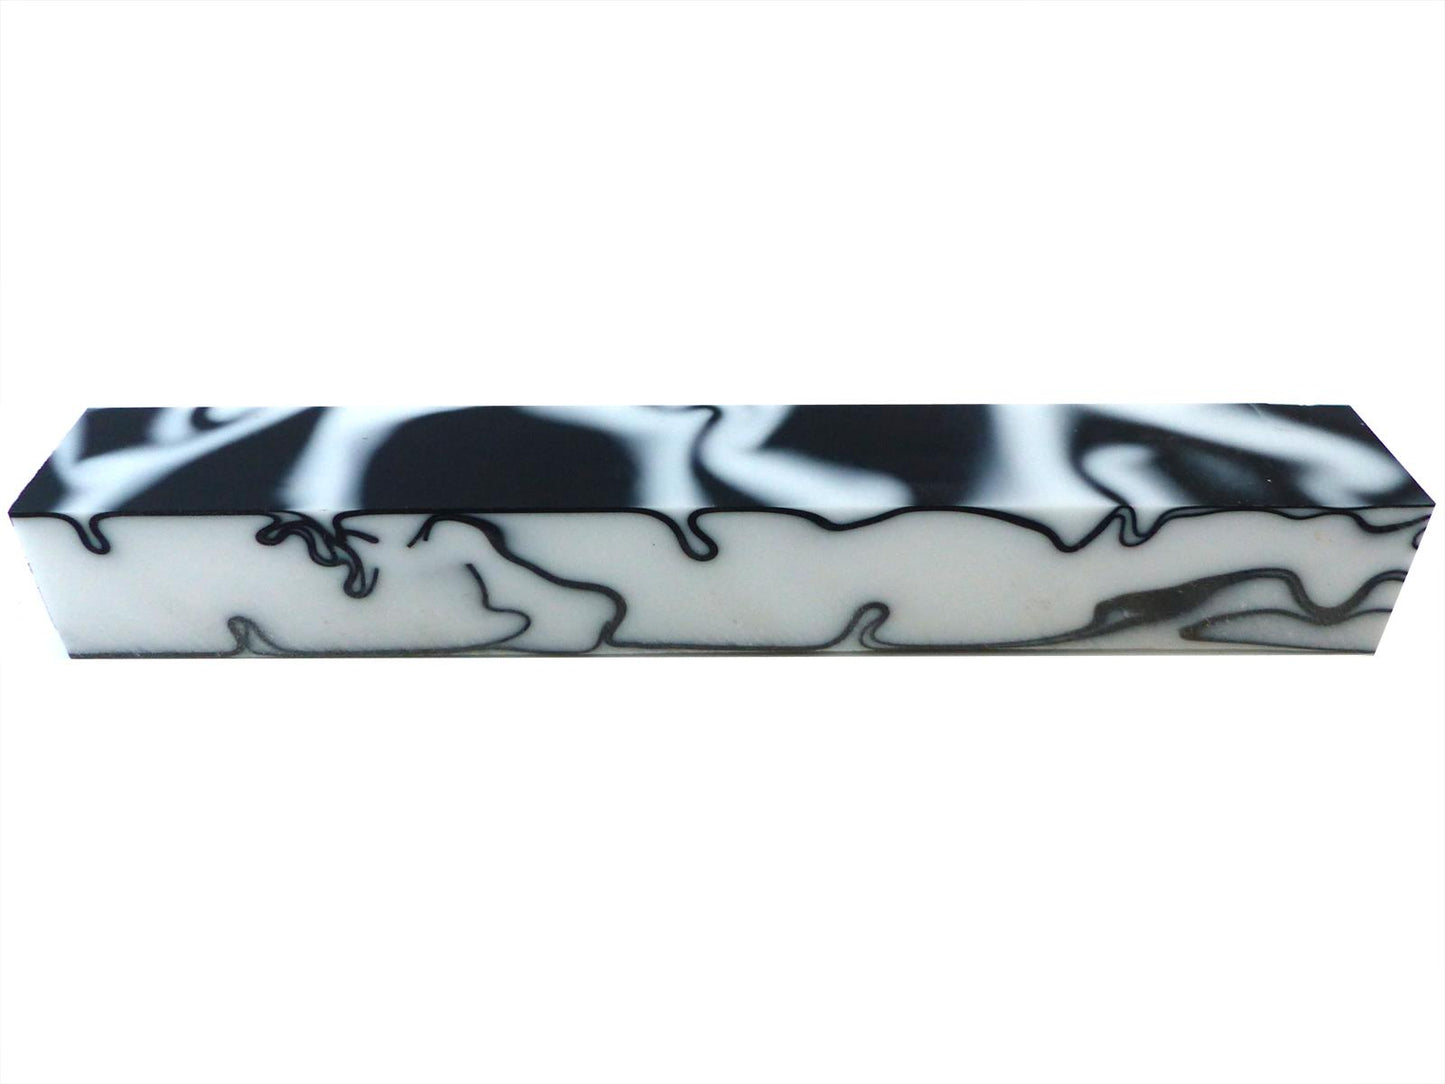 Turners' Mill Kirinite White/Black Whirl Abstract Kirinite Acrylic Pen Blank - 150x20x20mm (5.9x0.79x0.79"), 6x3/4x3/4"